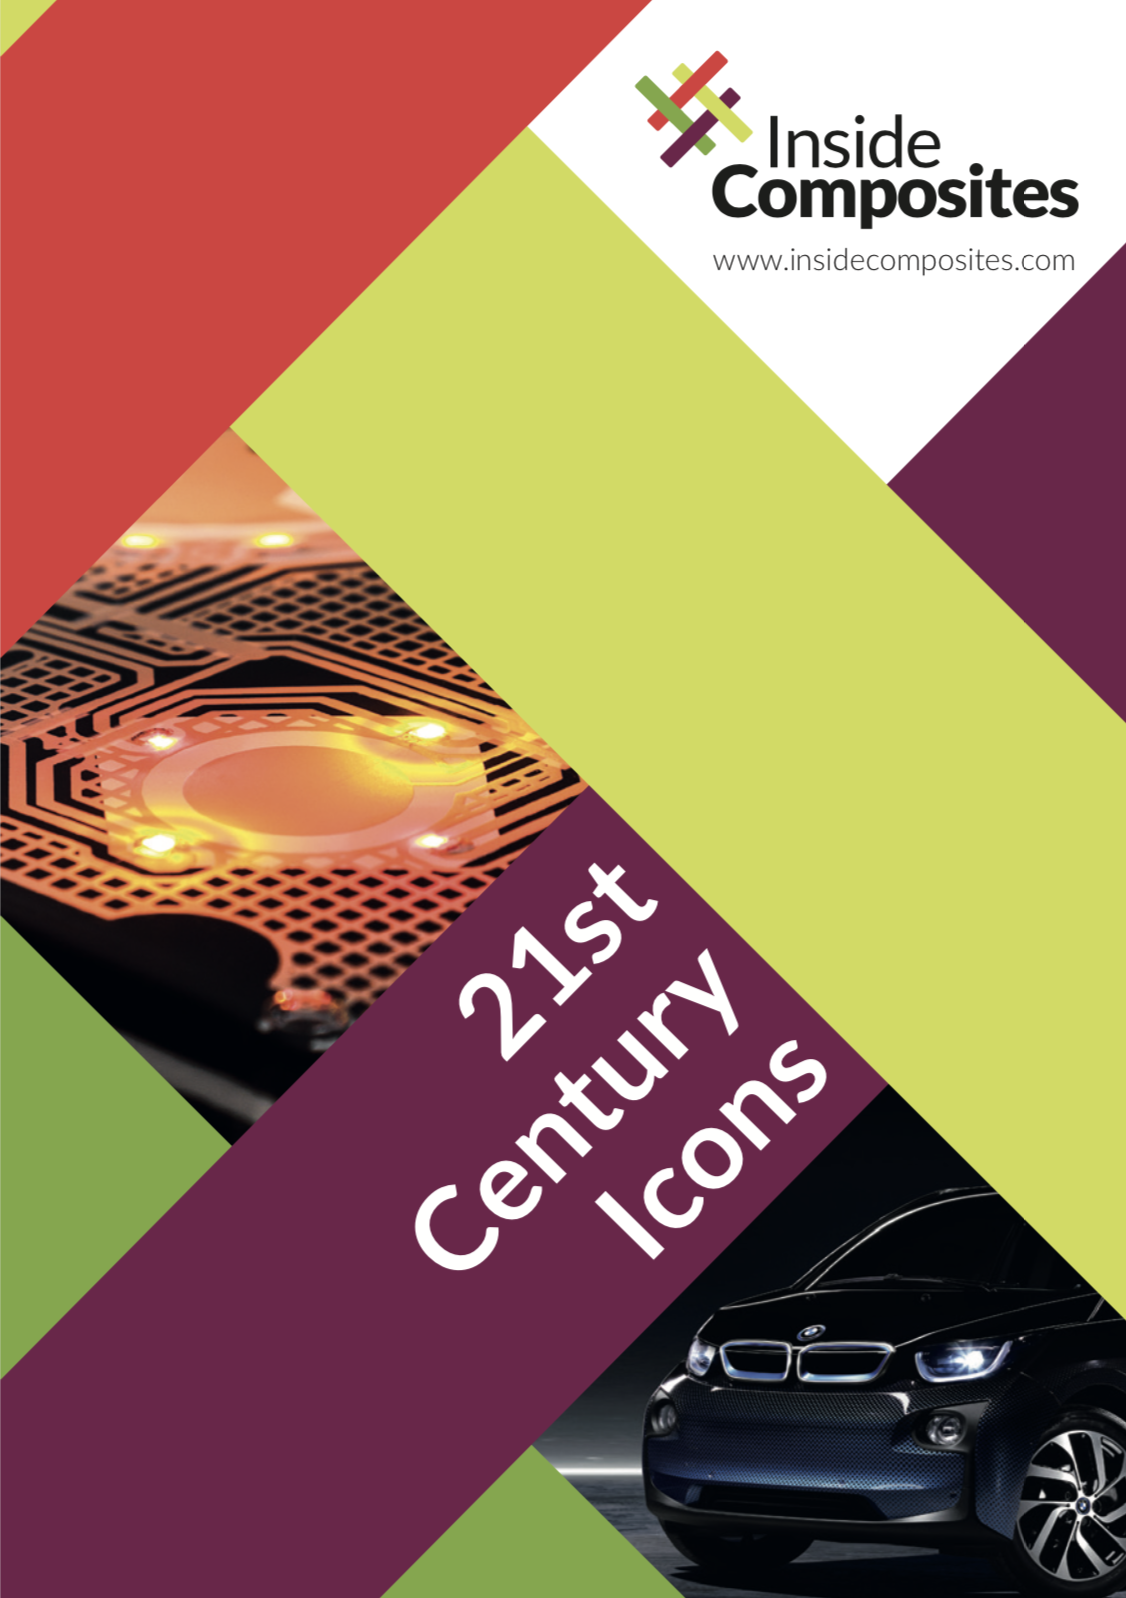 21st Century Icons in Composites